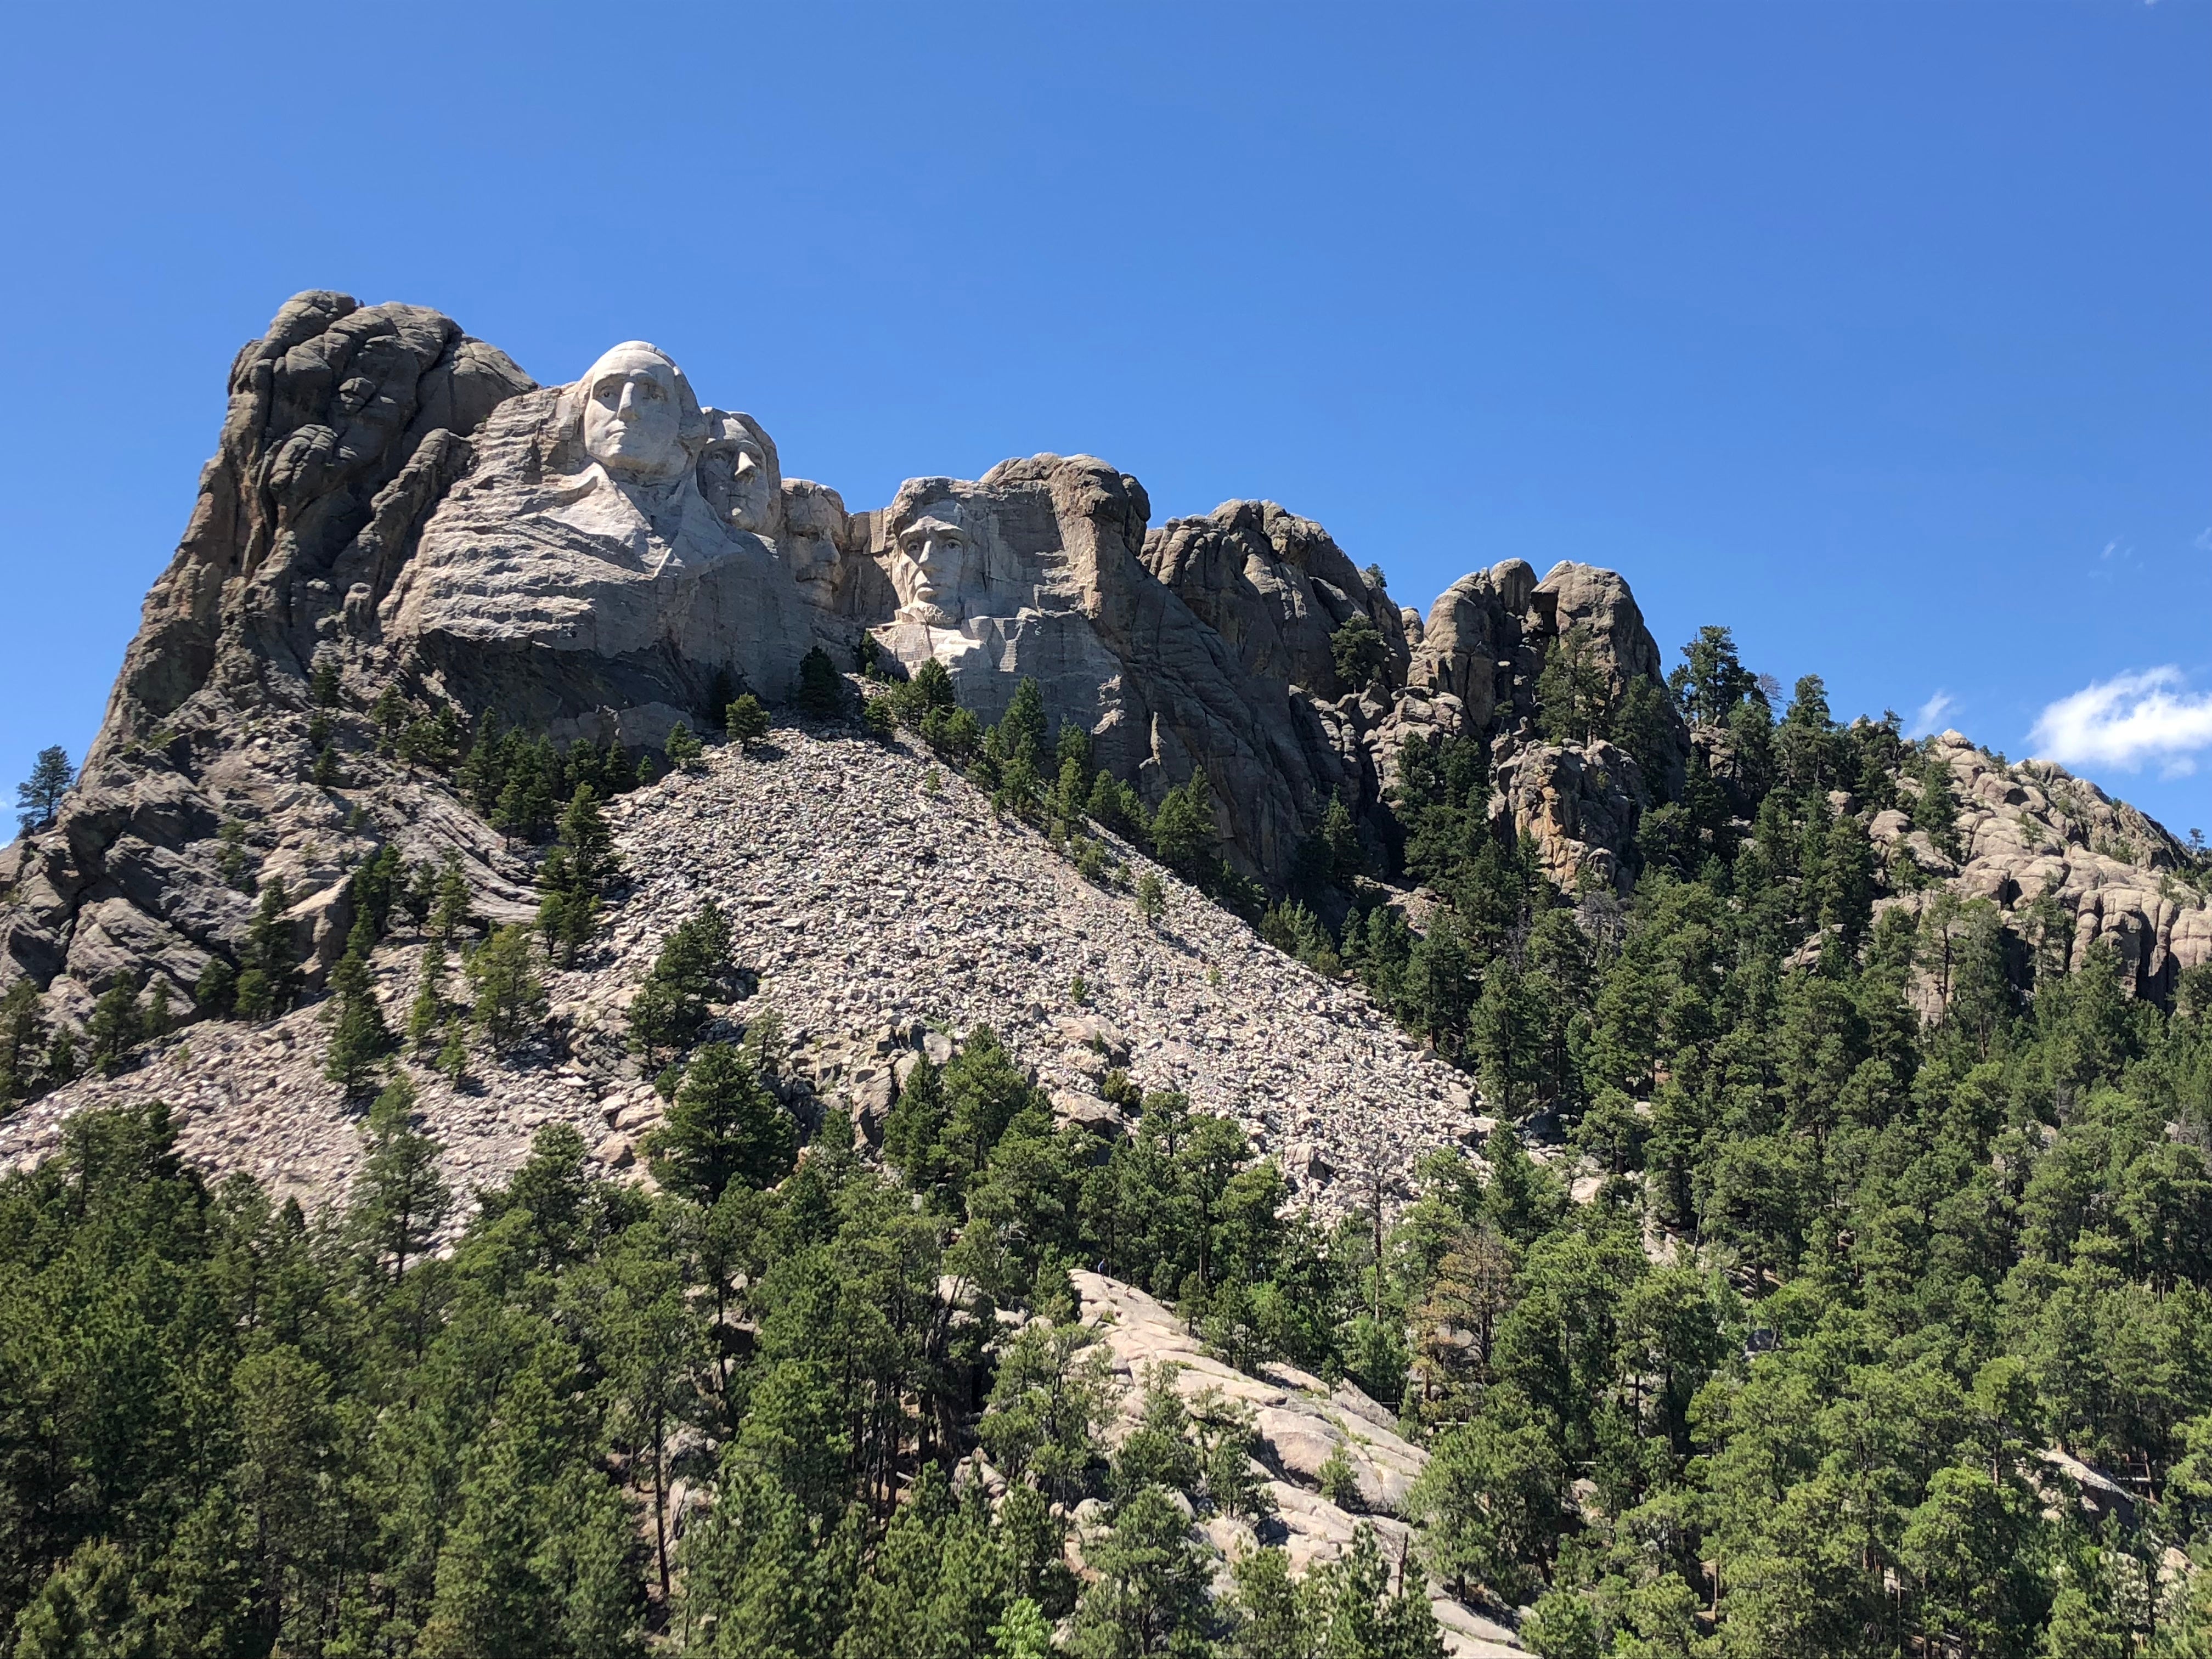 Mt. Rushmore 